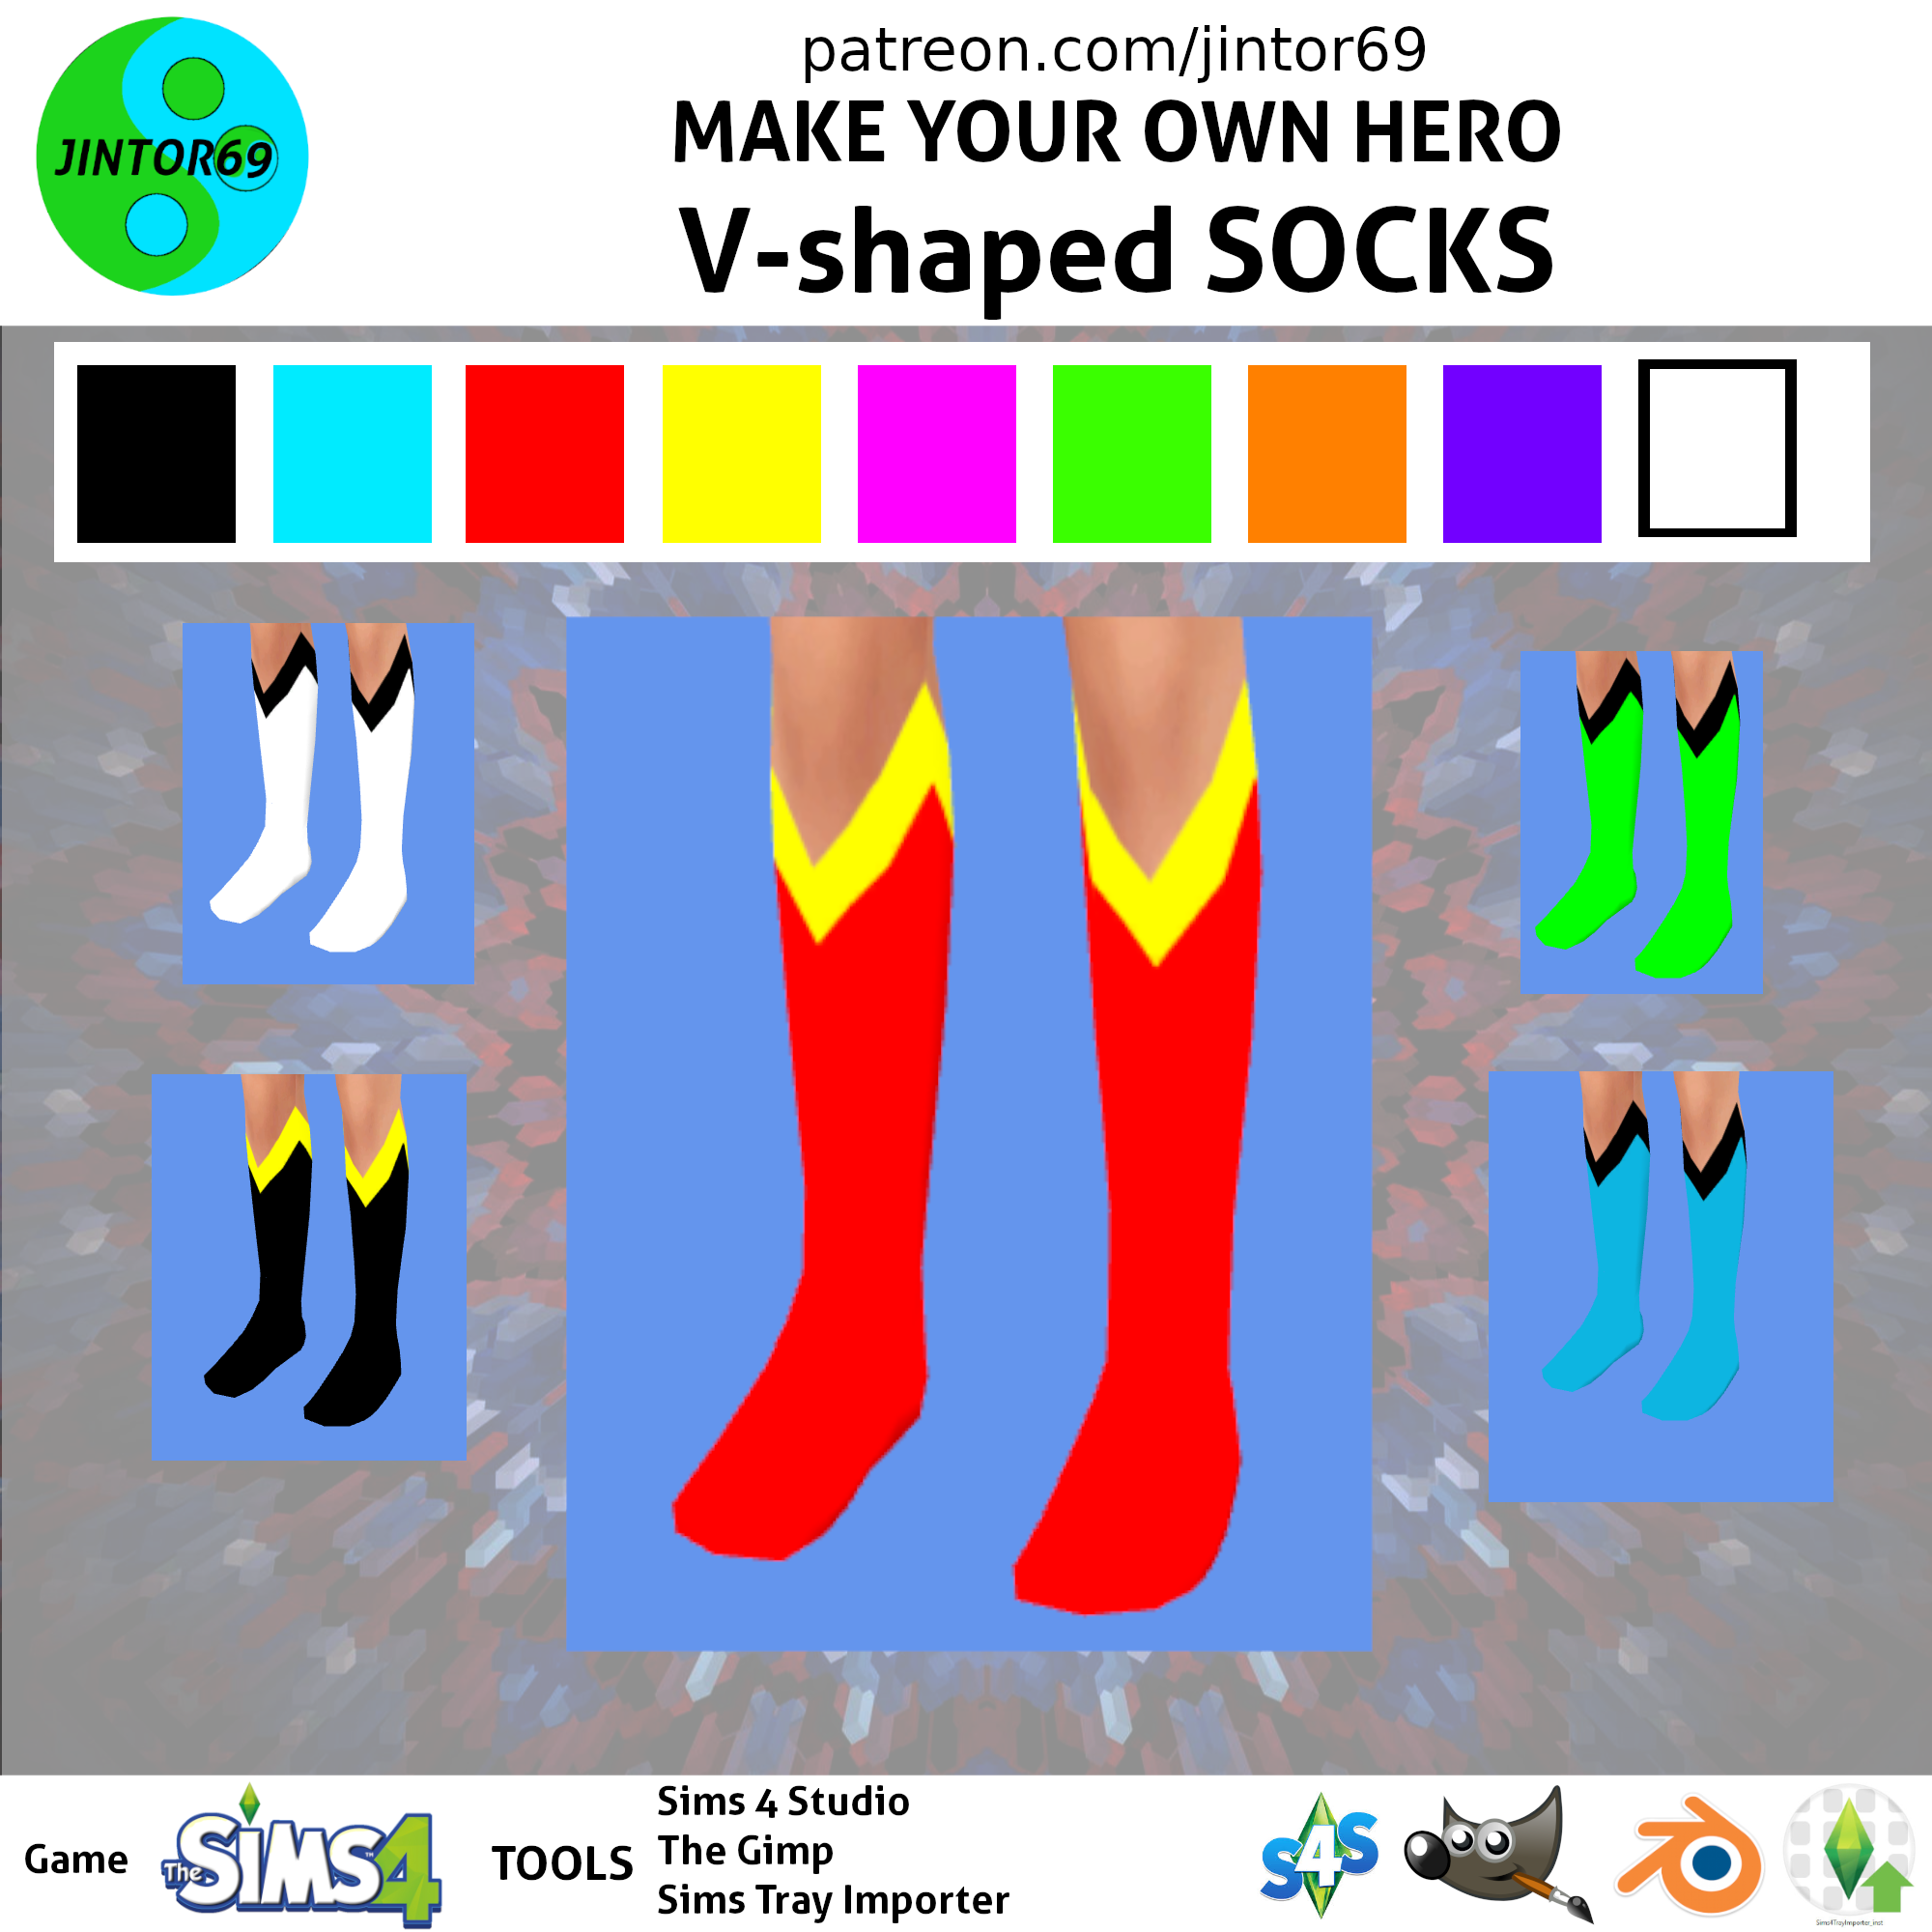 Hero Base Kit V shaped socks - Clothing - LoversLab